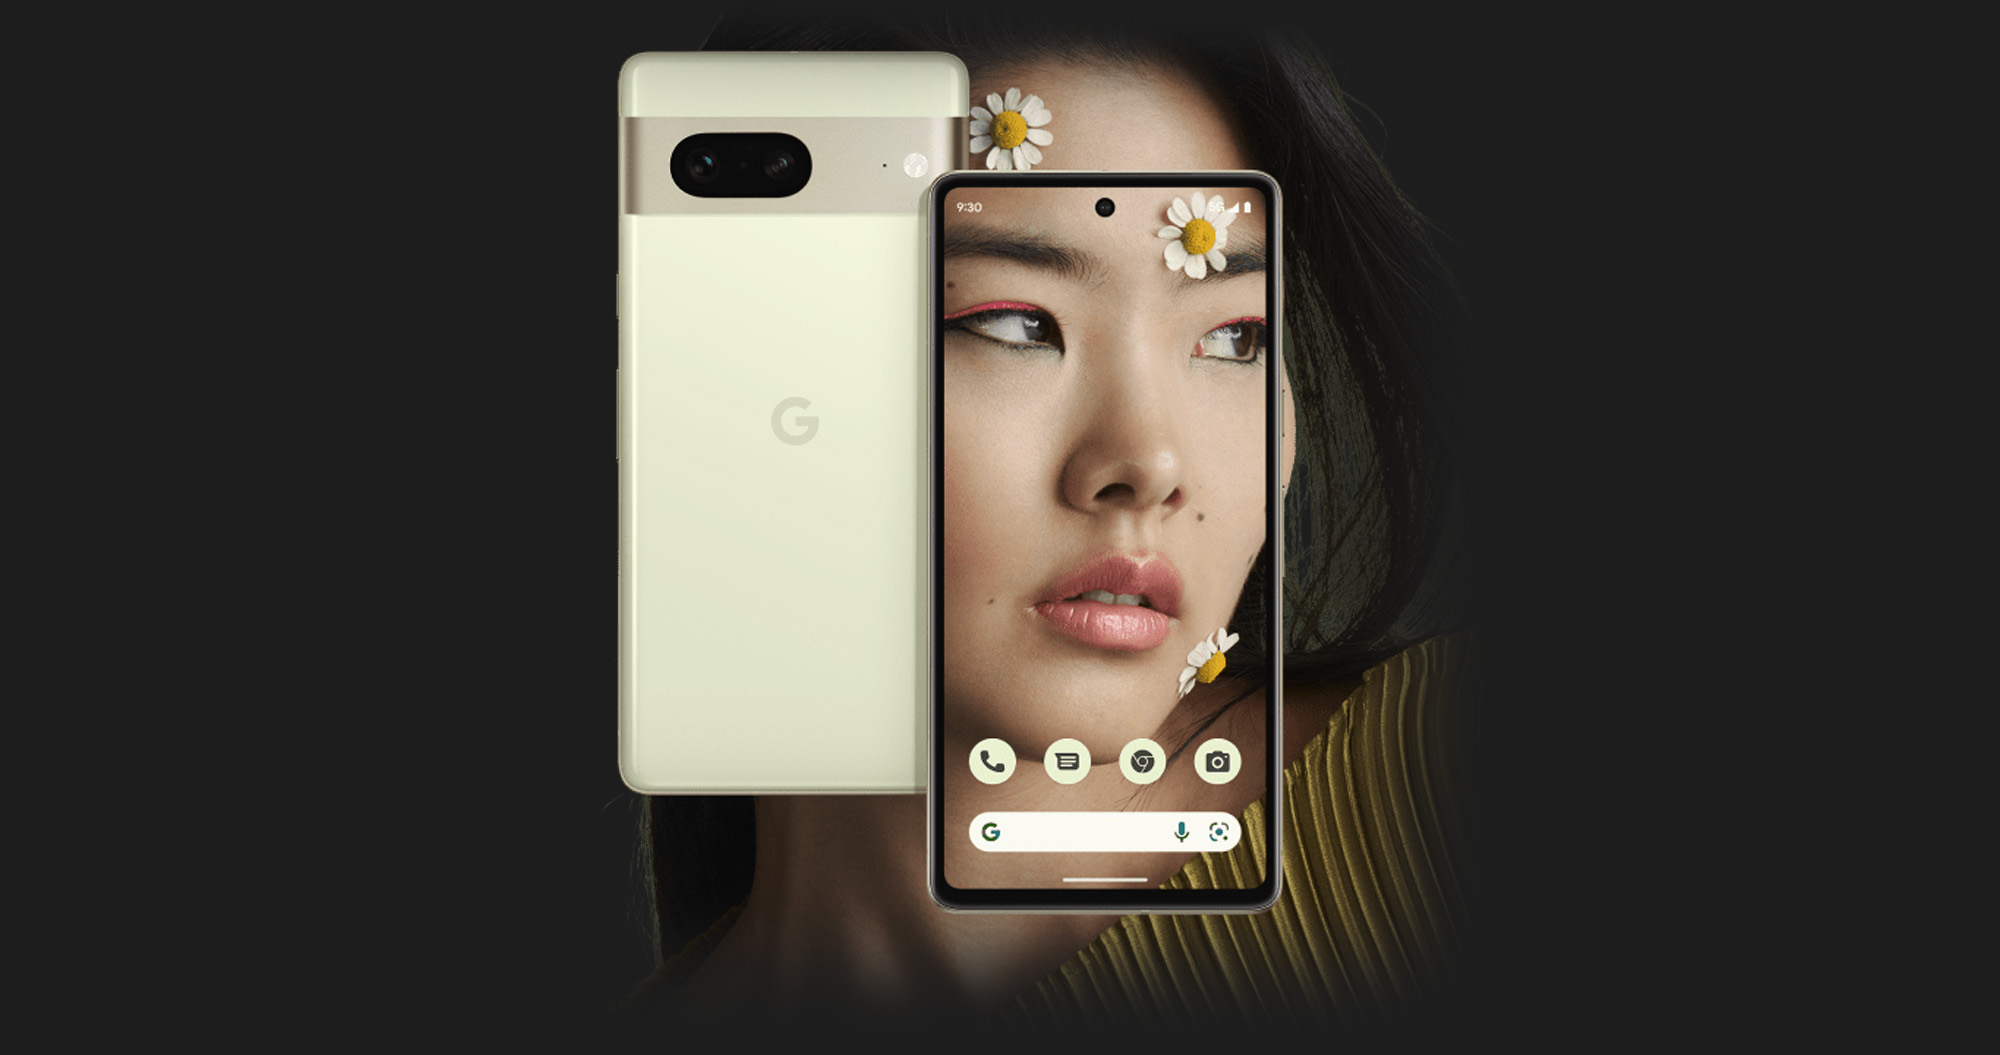 Смартфон Google Pixel 7 8/128GB (Lemongrass)